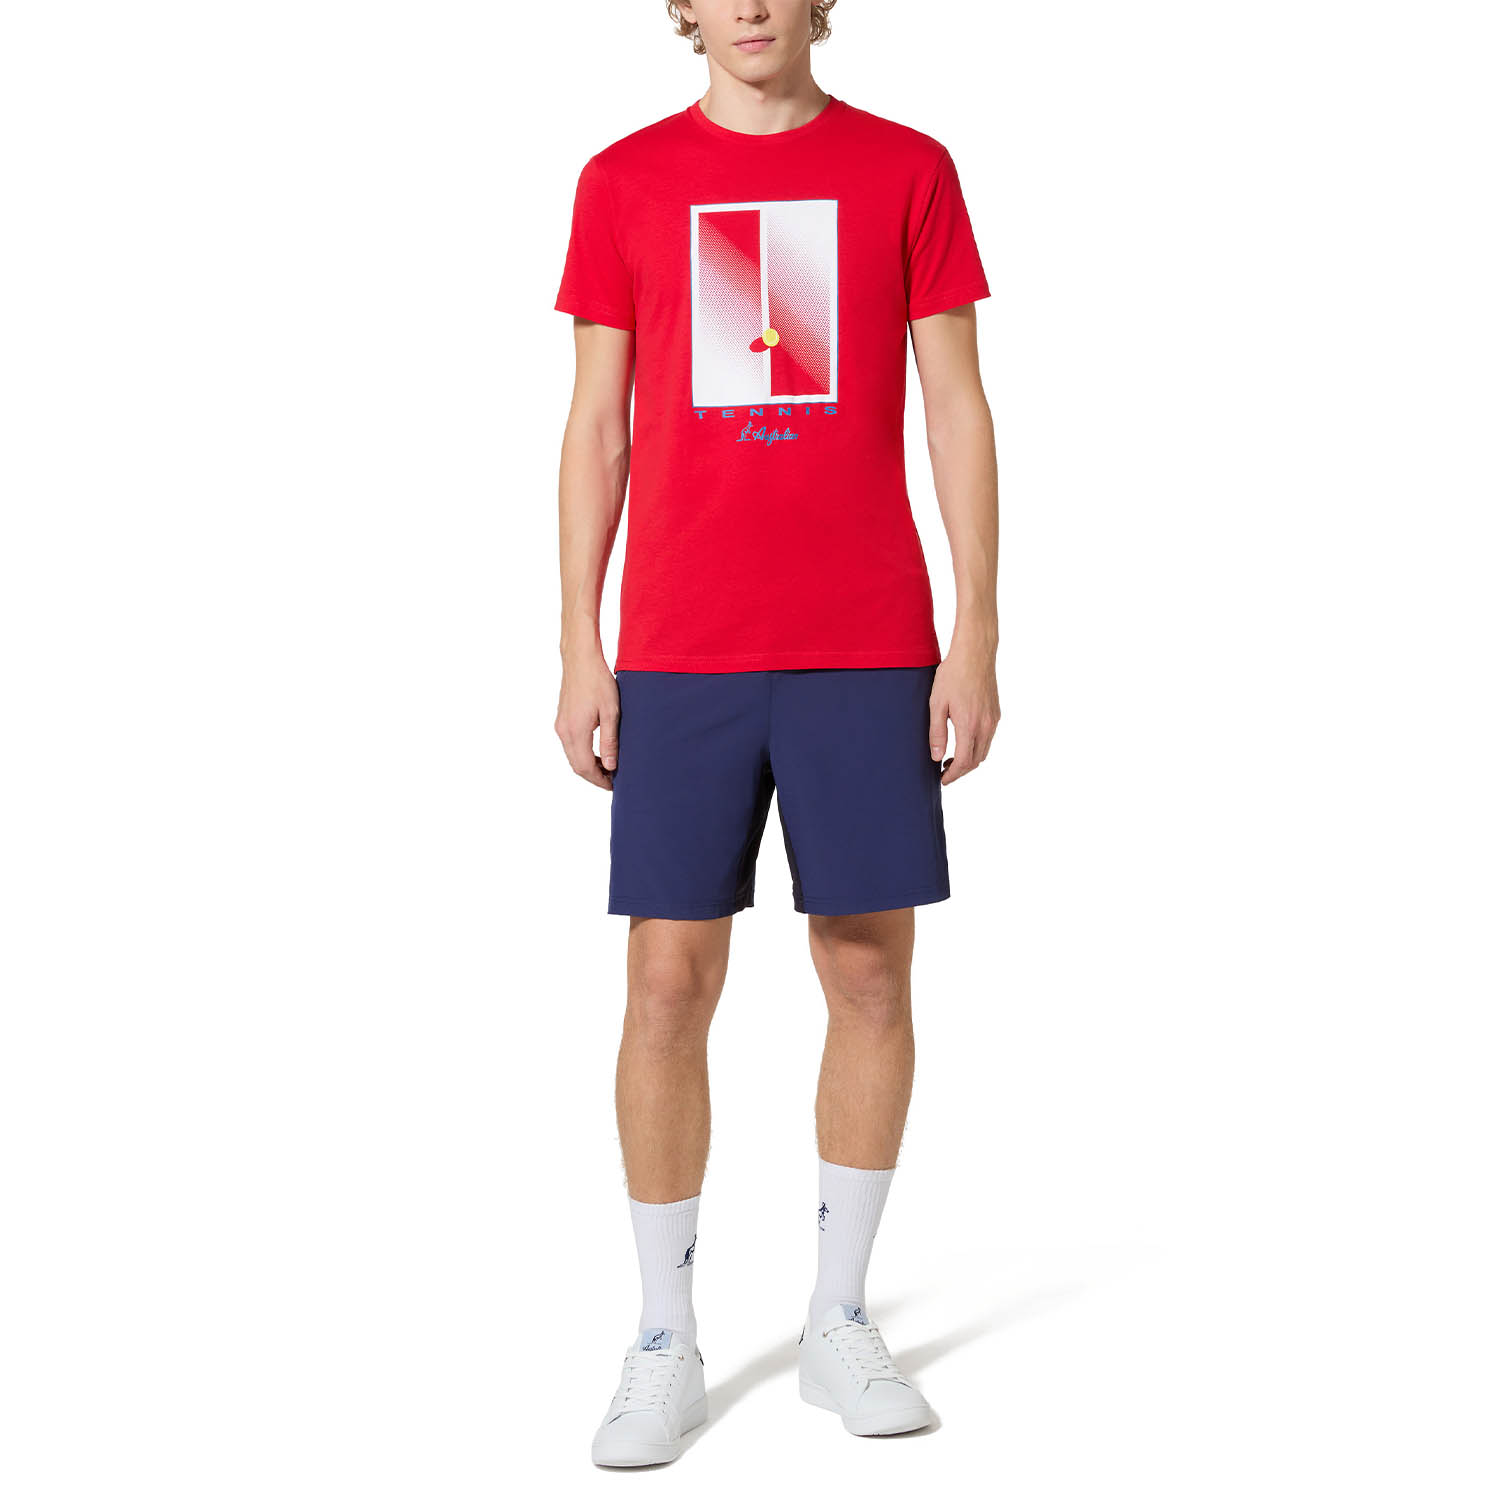 Australian Abstract Court Camiseta - Rosso Vivo